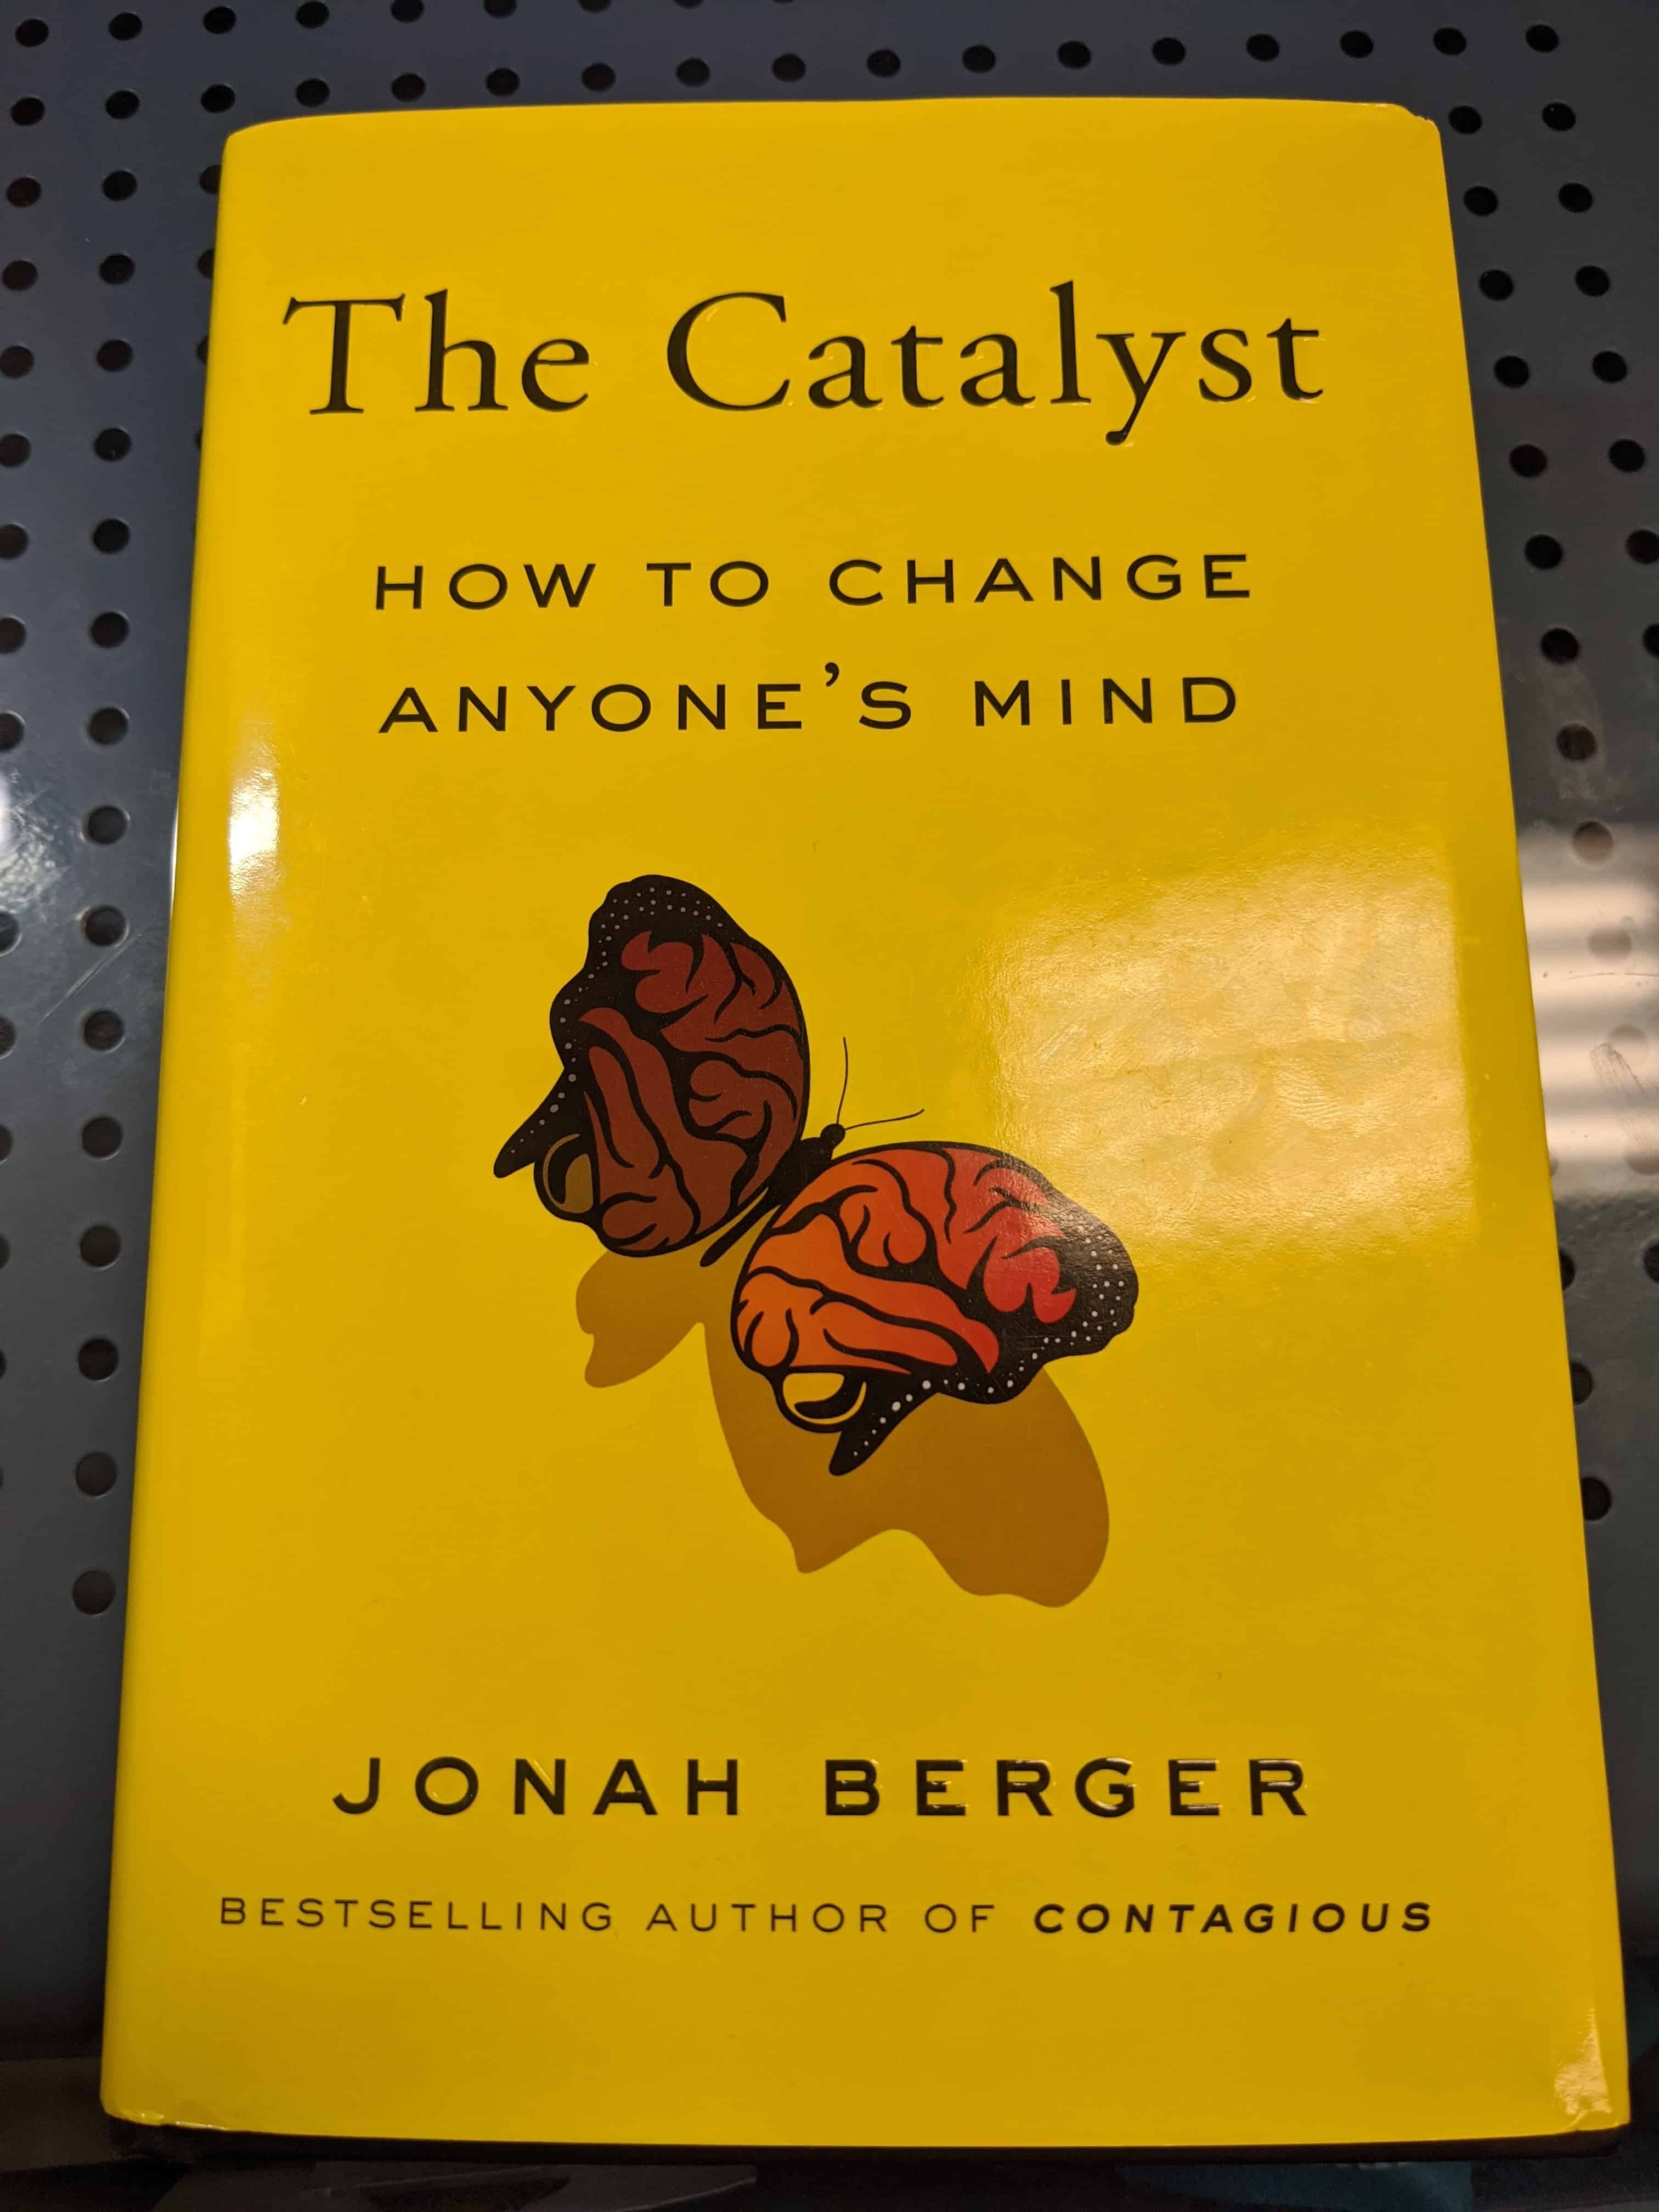 jonah berger's the catalyst